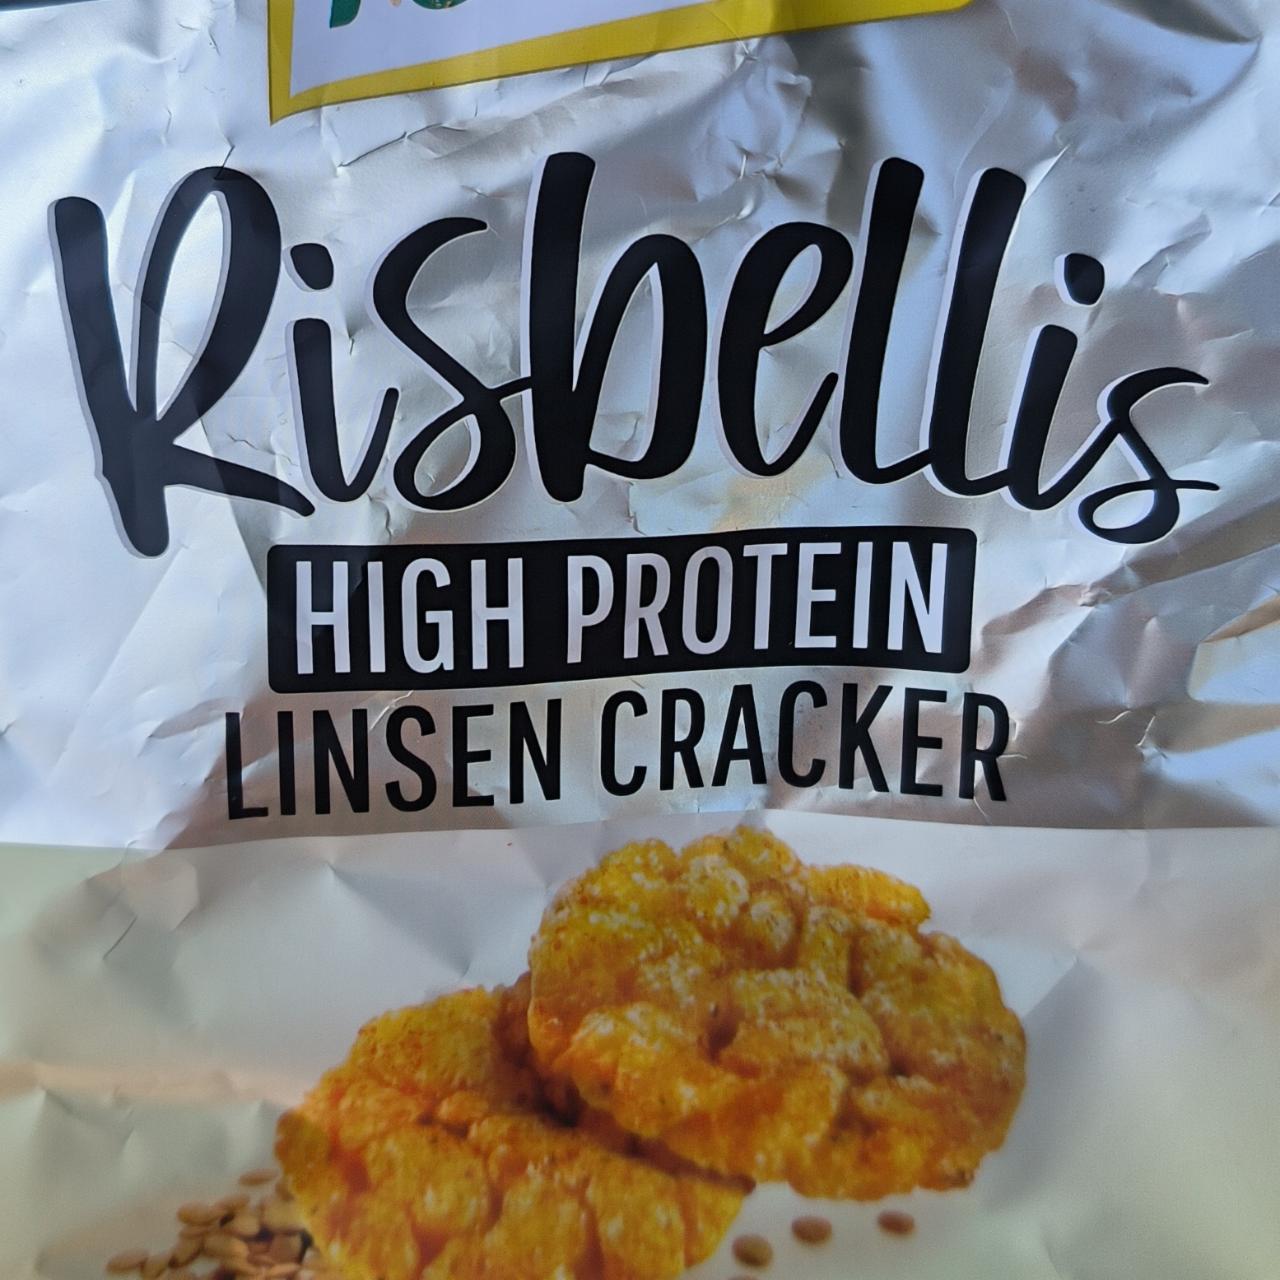 Zdjęcia - Risbellis high protein linsen cracker Reis fit